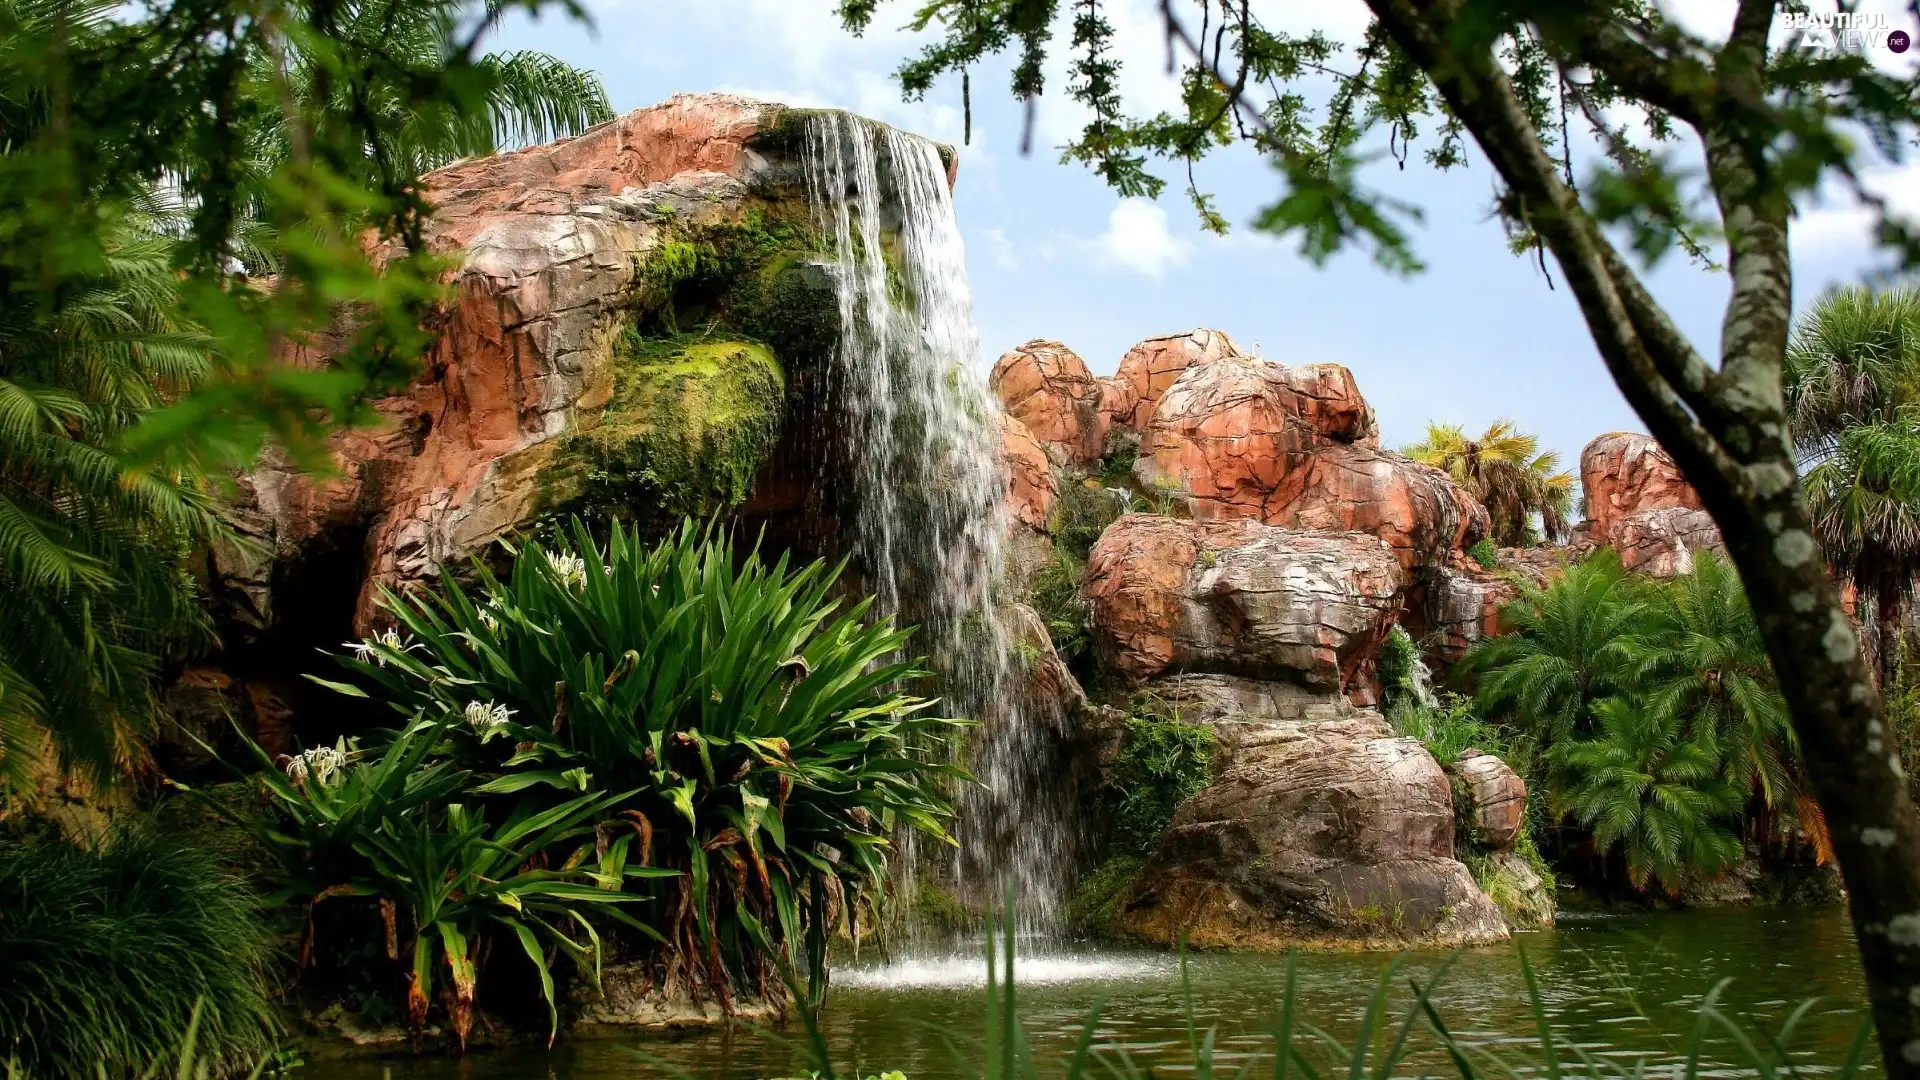 Plants, waterfall, rocks